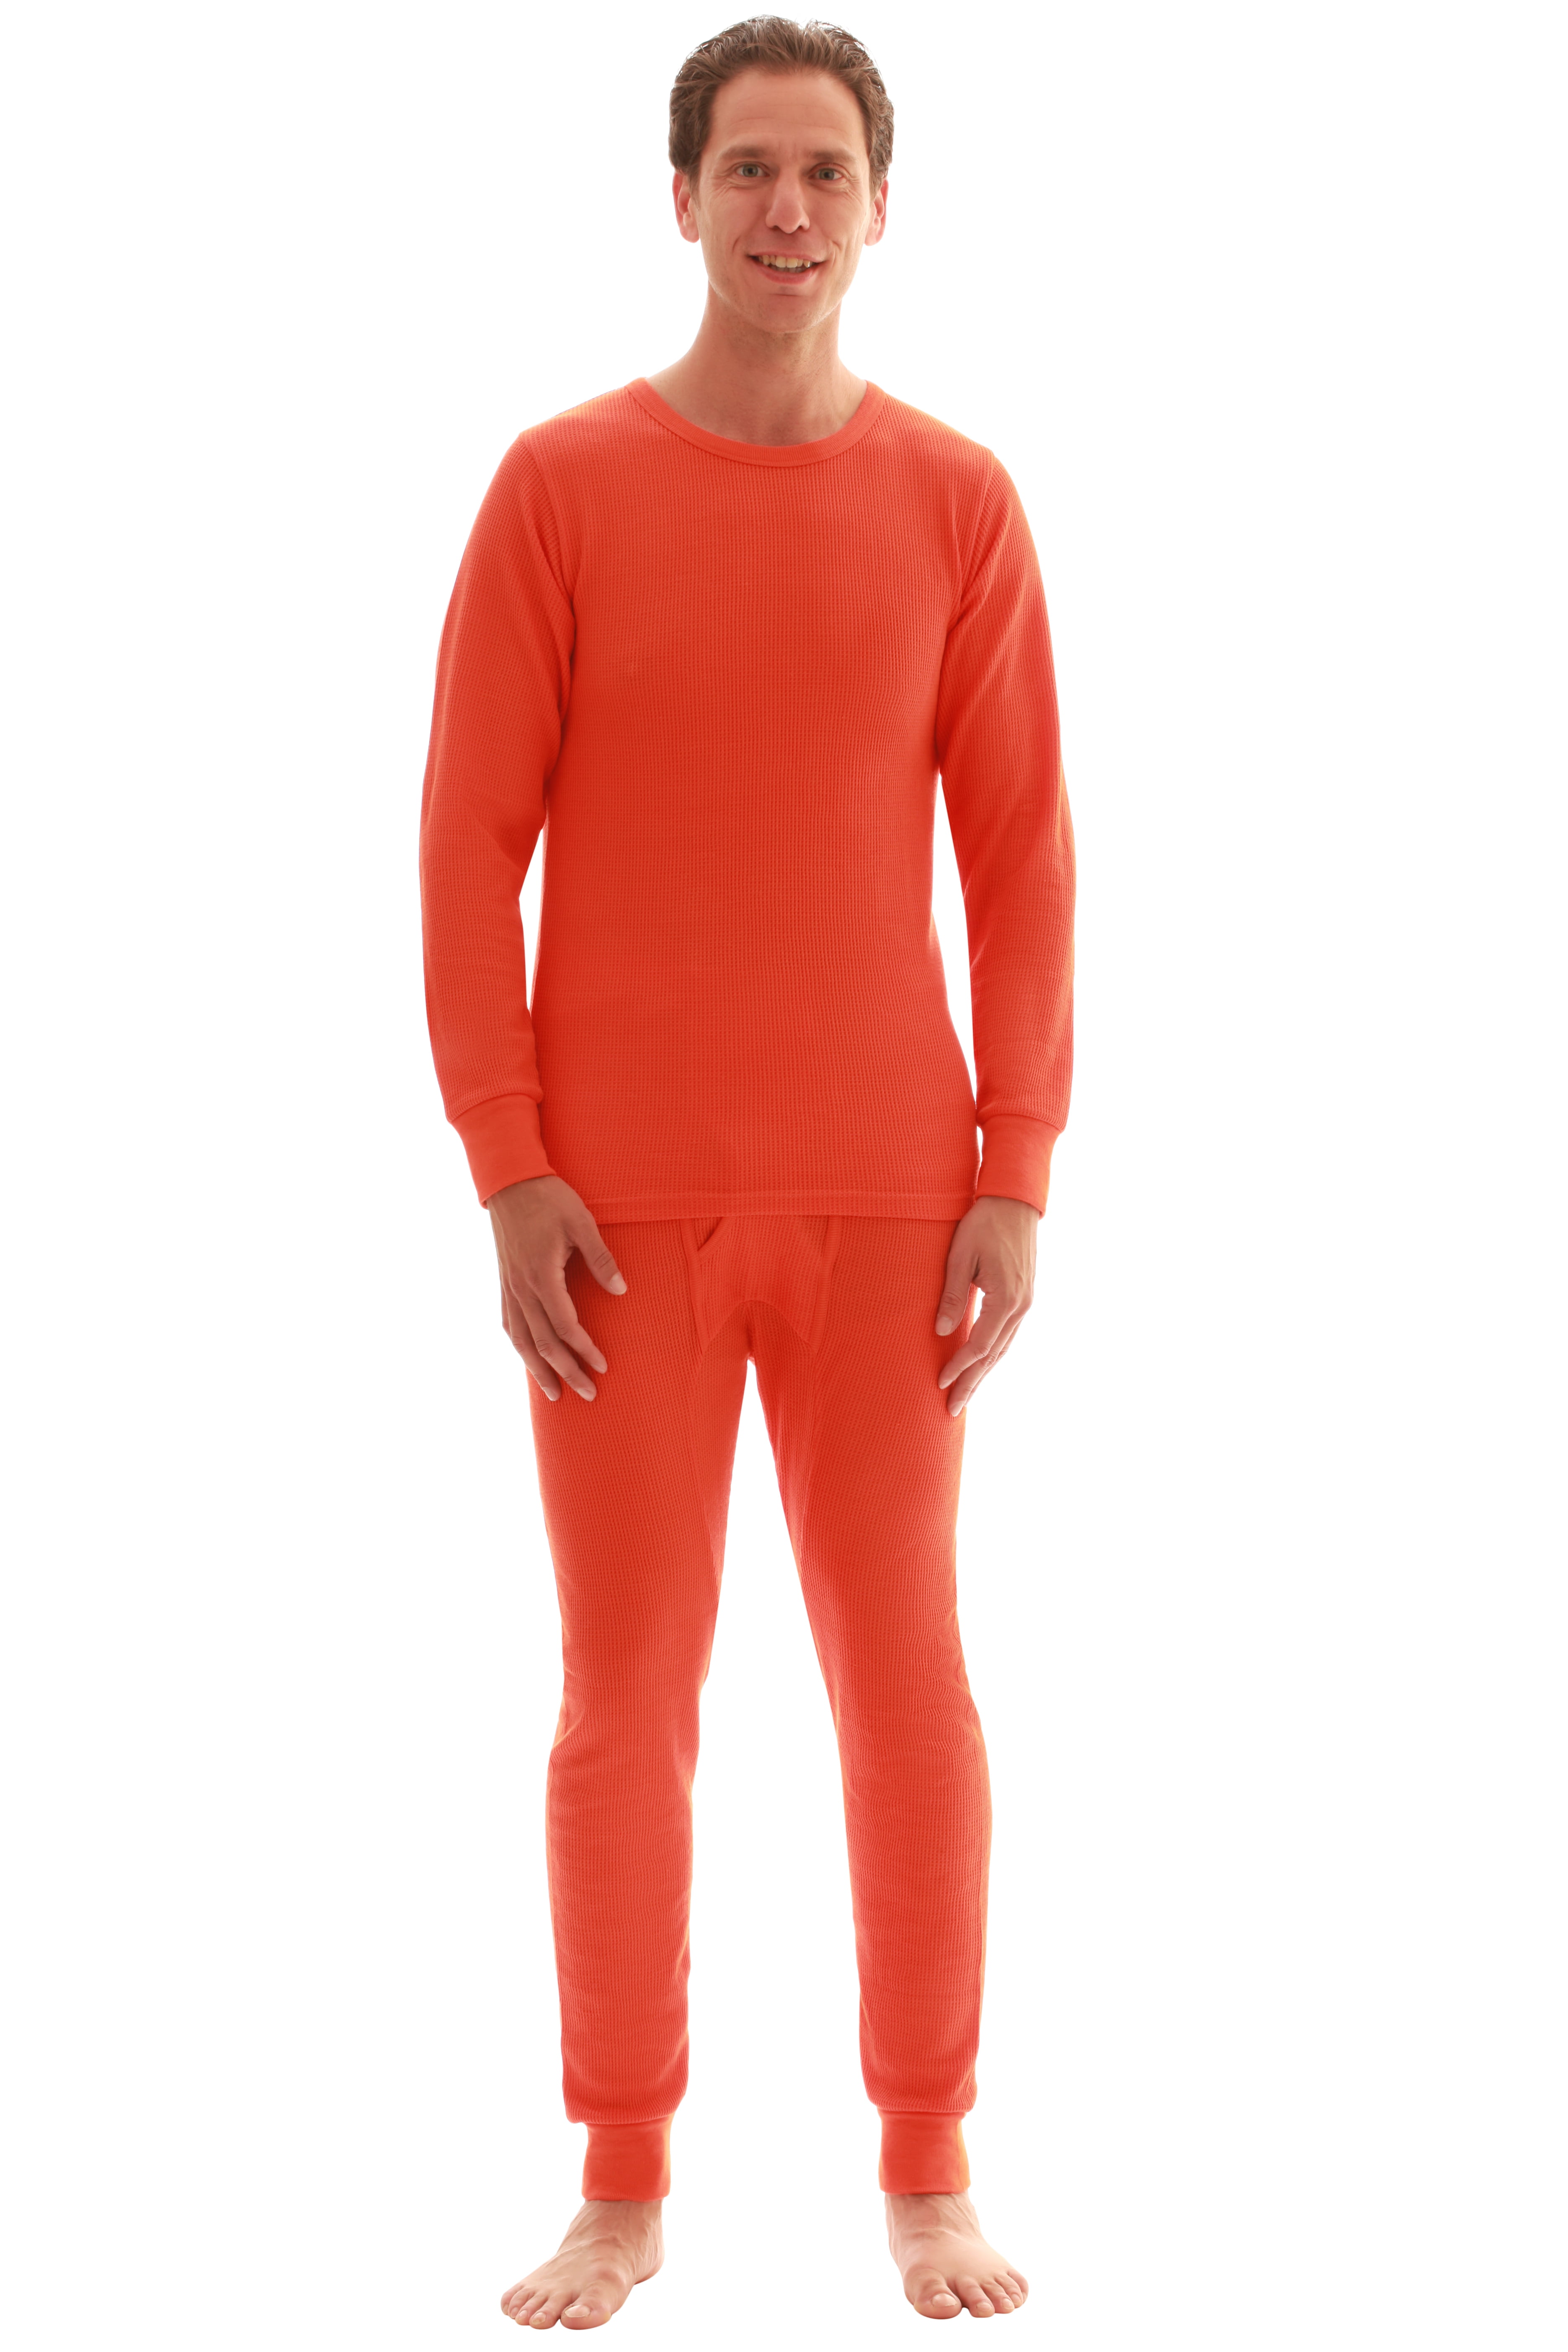 At The Buzzer Men's Thermal Underwear Set - Base Layer Long Johns for  Warmth in Winter (Orange, Medium)